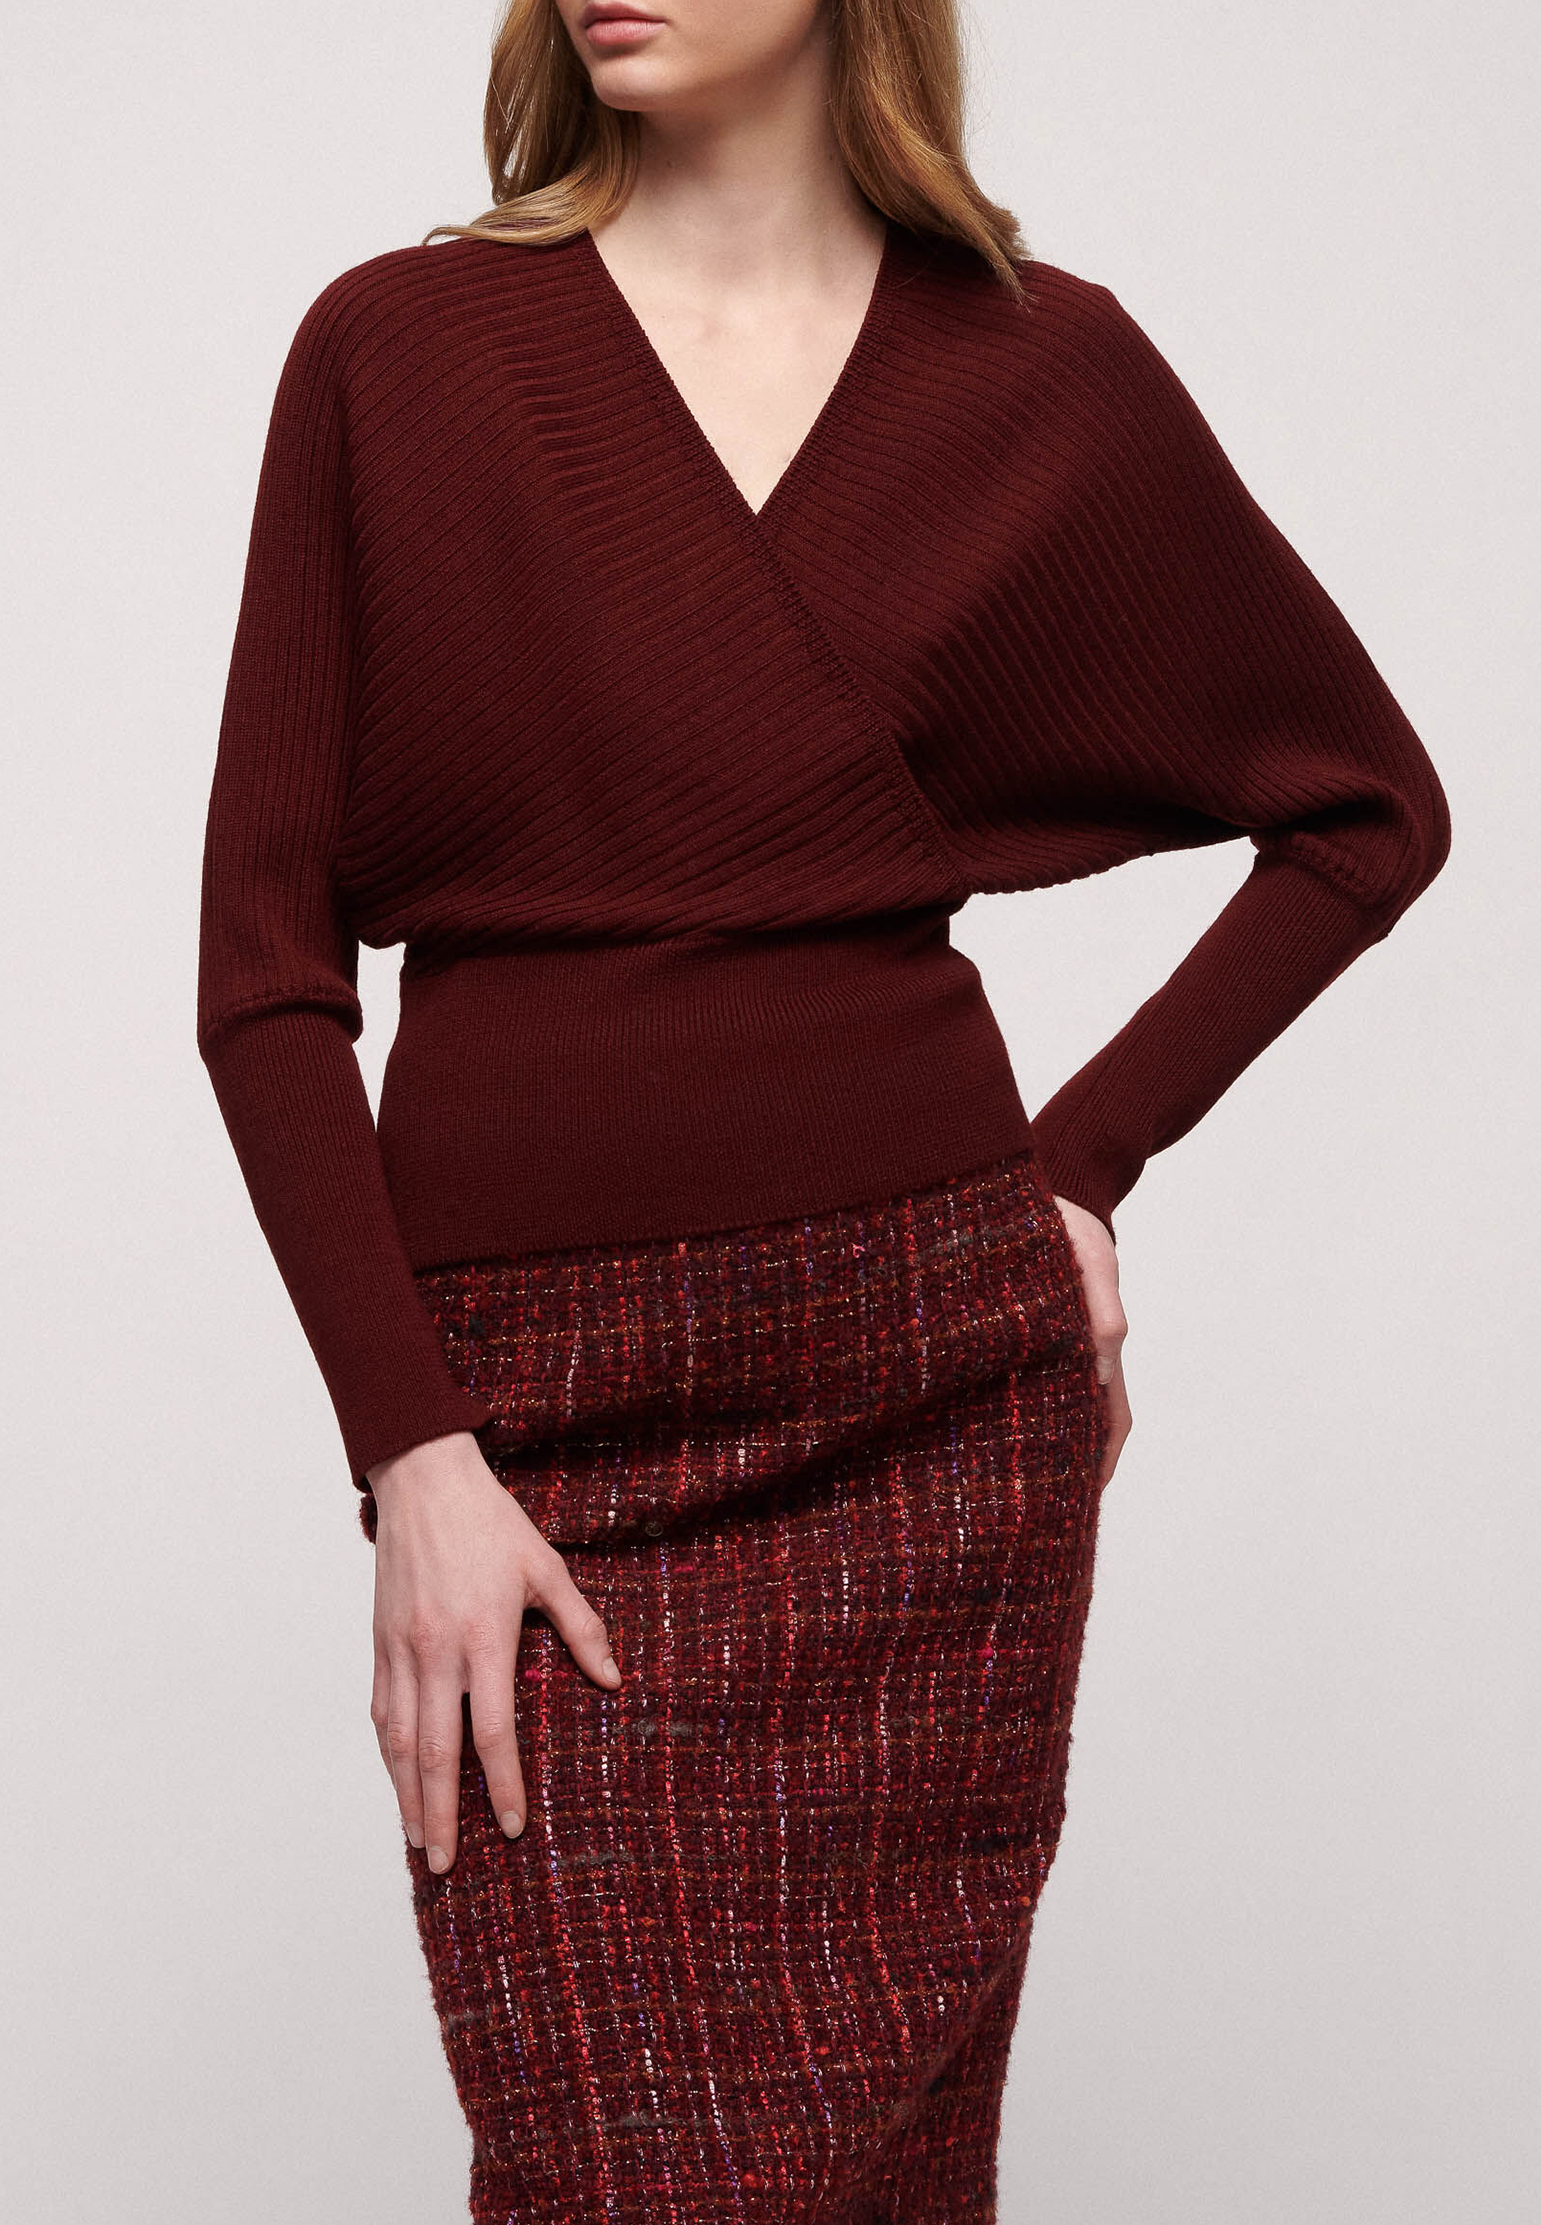 Пуловер LUISA SPAGNOLI бордового цвета